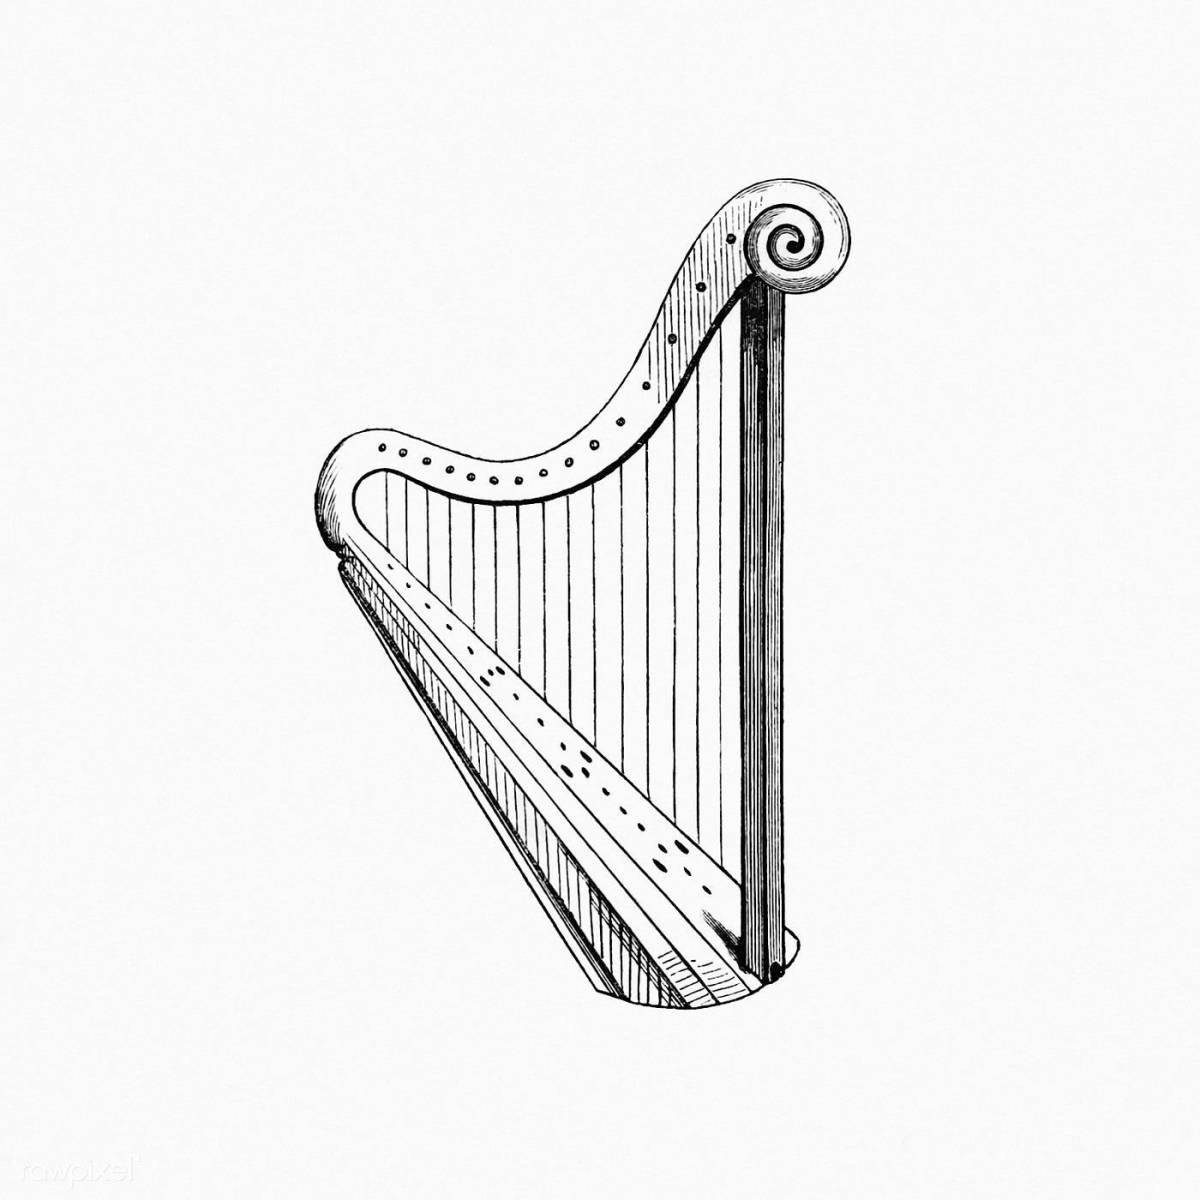 Harmonious drawing of a harp